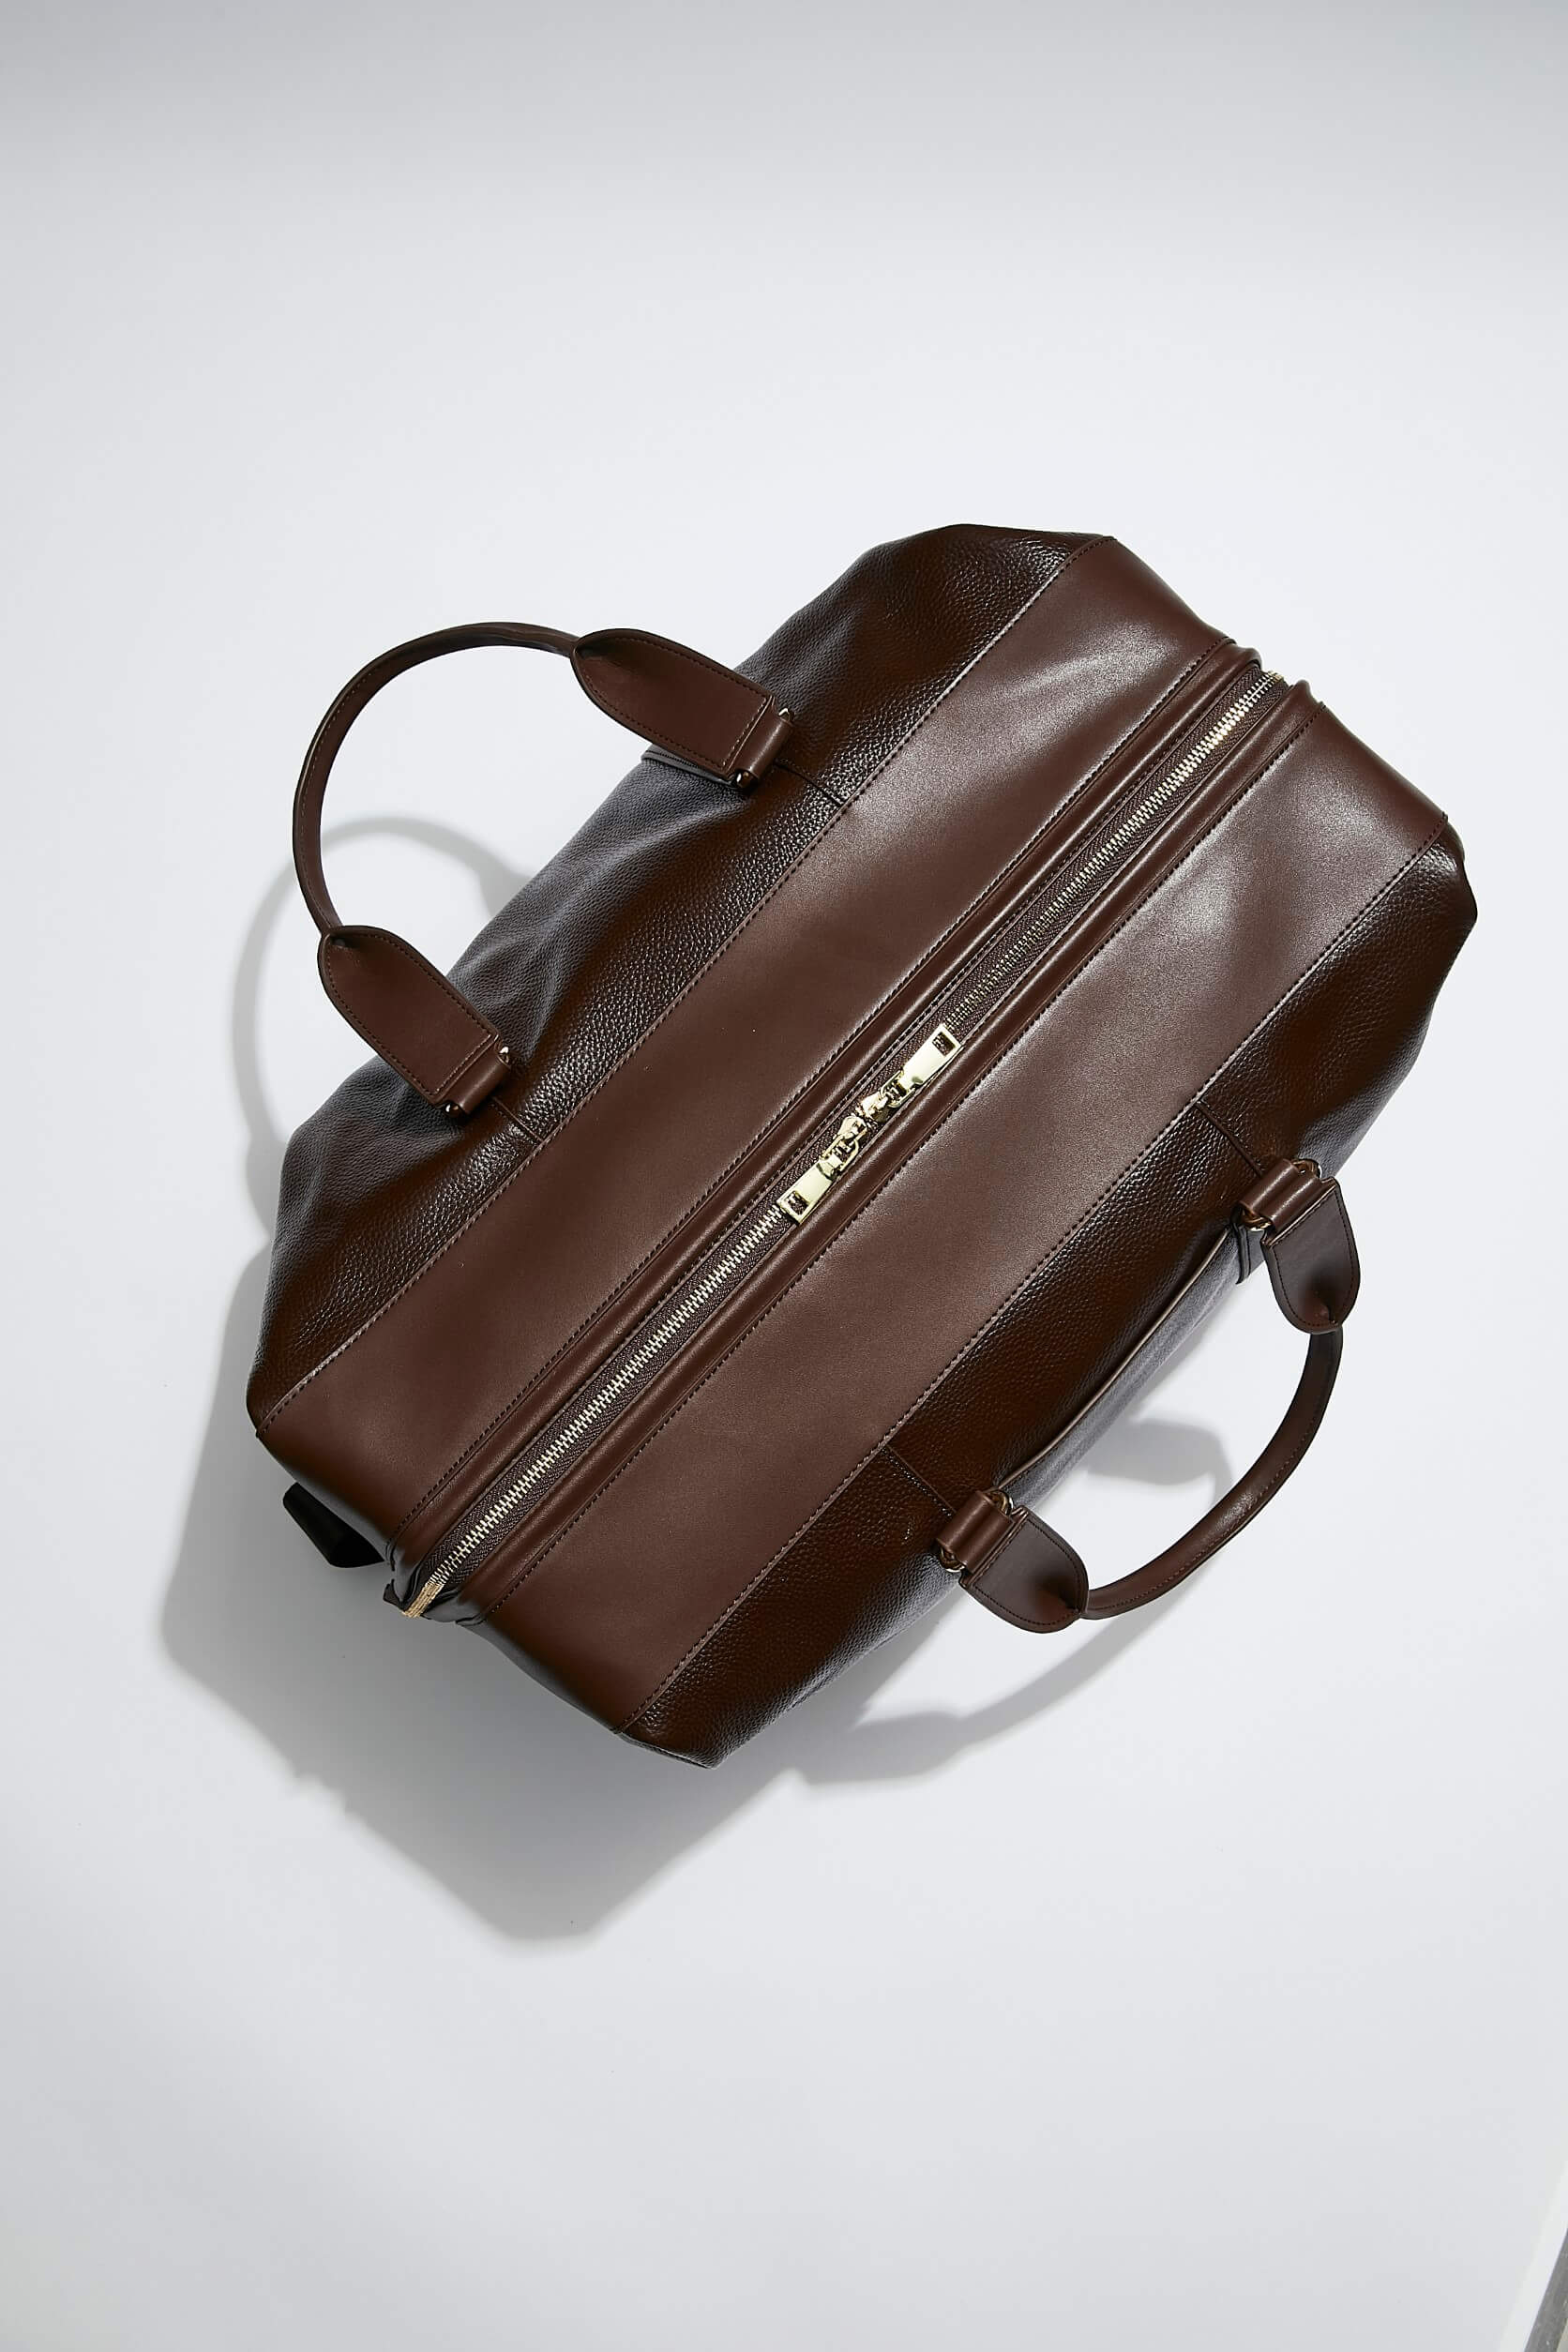 mon-purse-weekender-bag-chocolate-brown-leather-gold-hardware-side_1.jpg